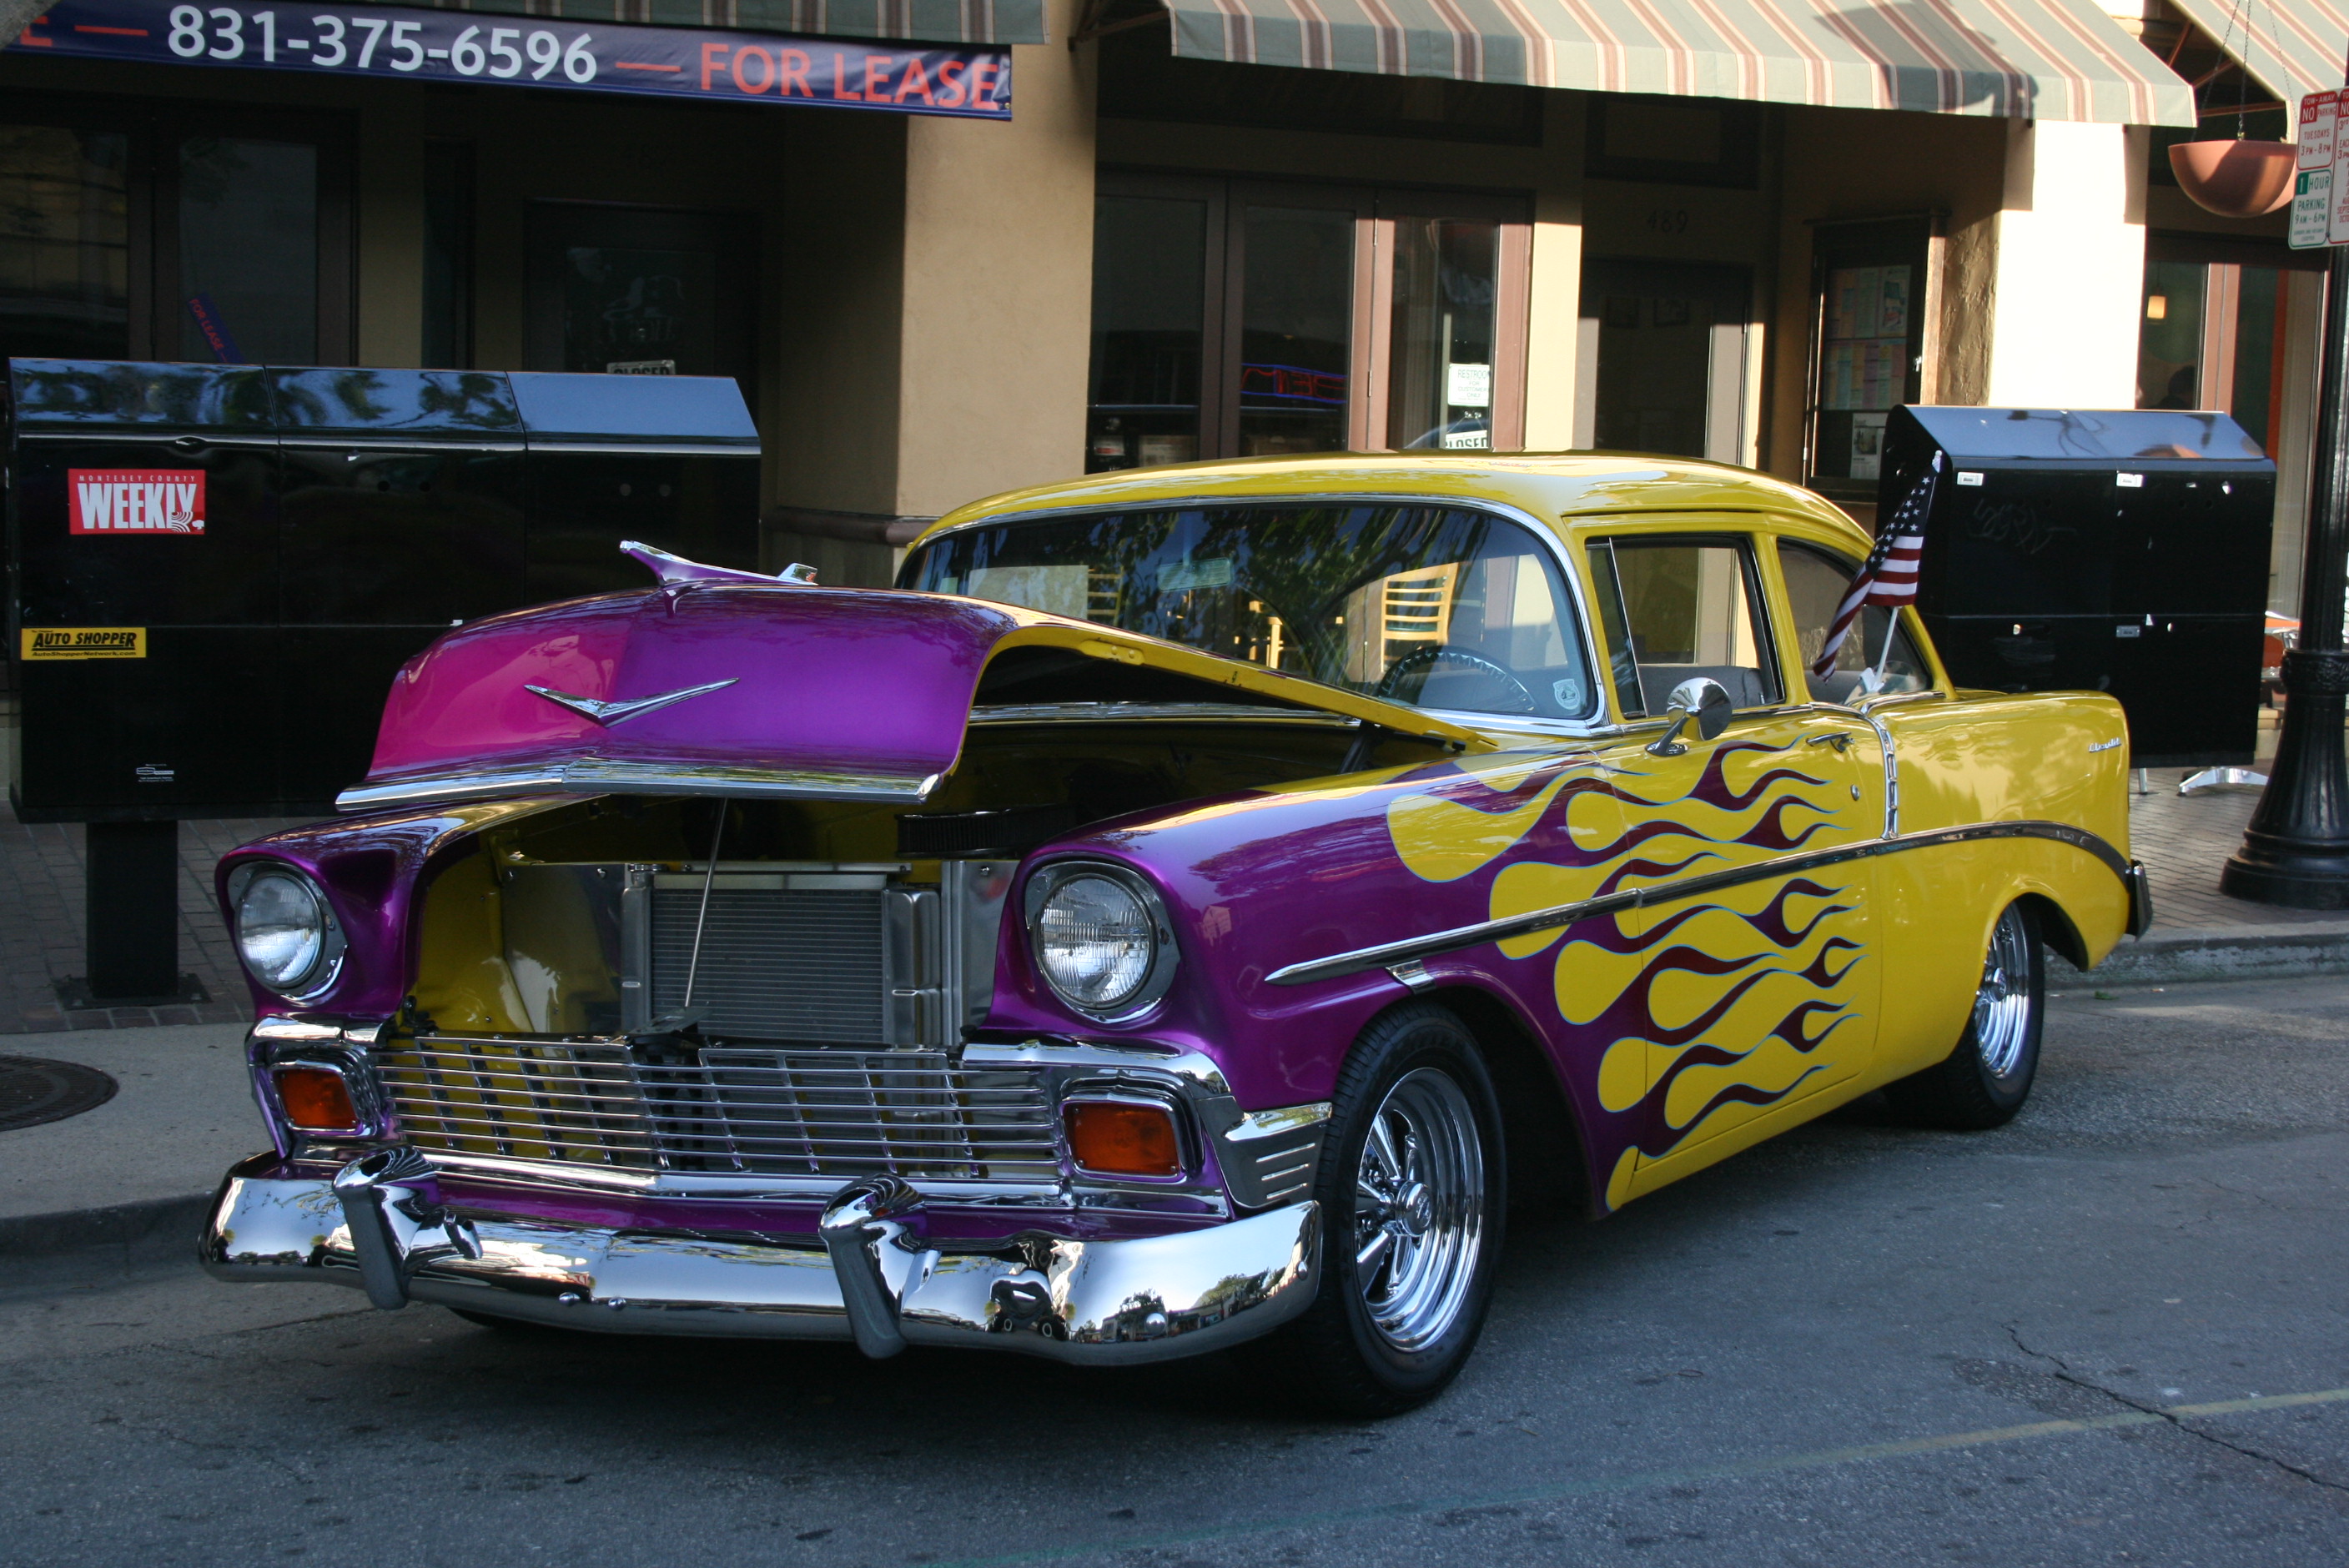 Hot Rod and Custom Car meet, Monterey - Flickr - Supermac1961 (5).jpg